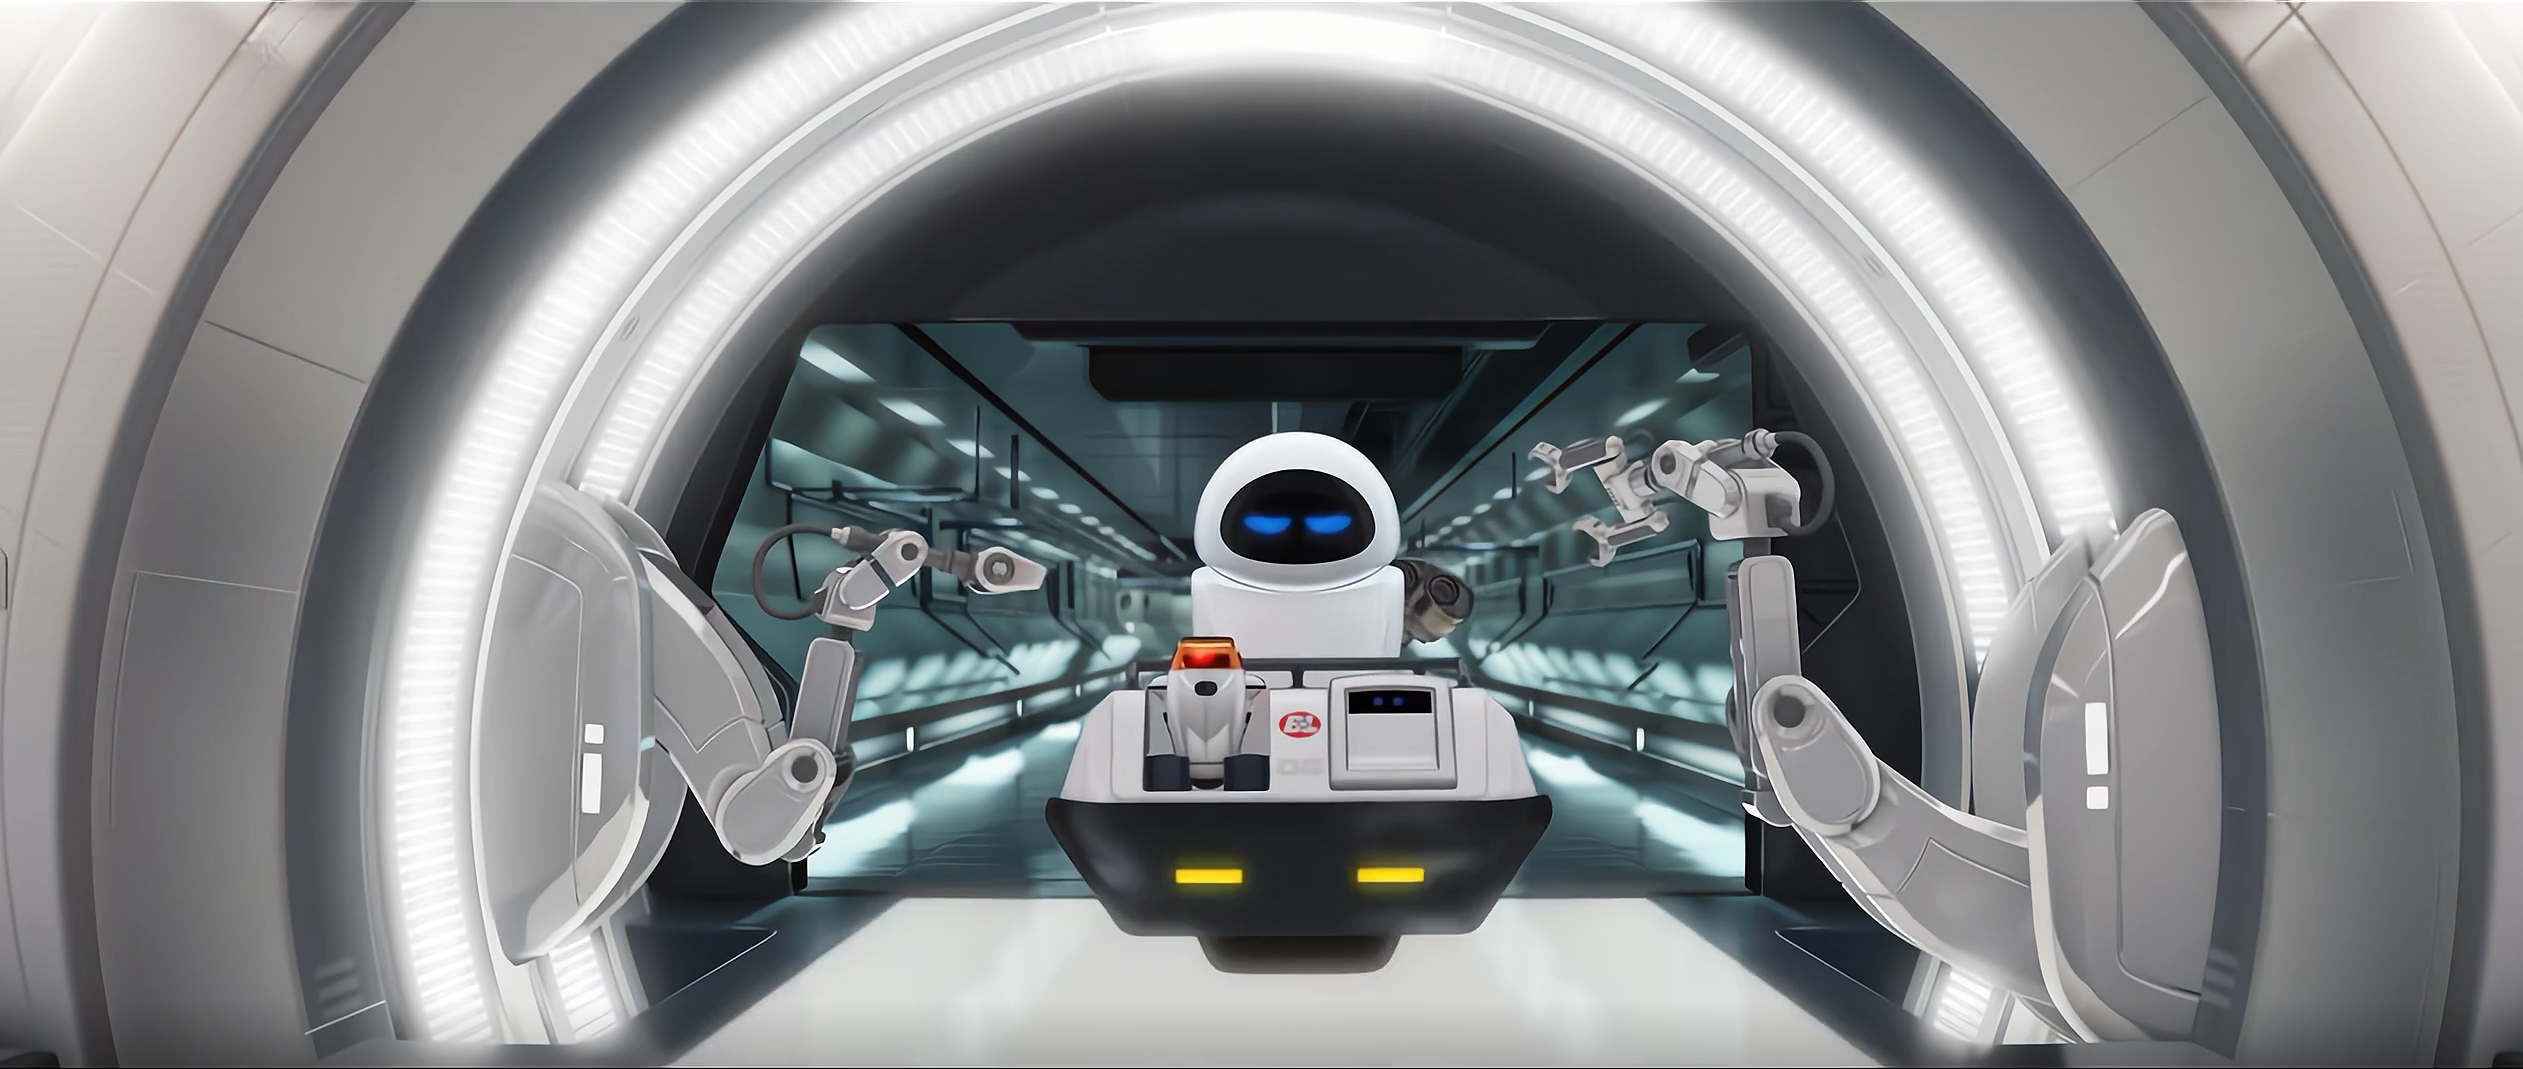 General 2523x1069 WALL-E screen shot Pixar Animation Studios movies Disney CGI robot EVE (Movies)